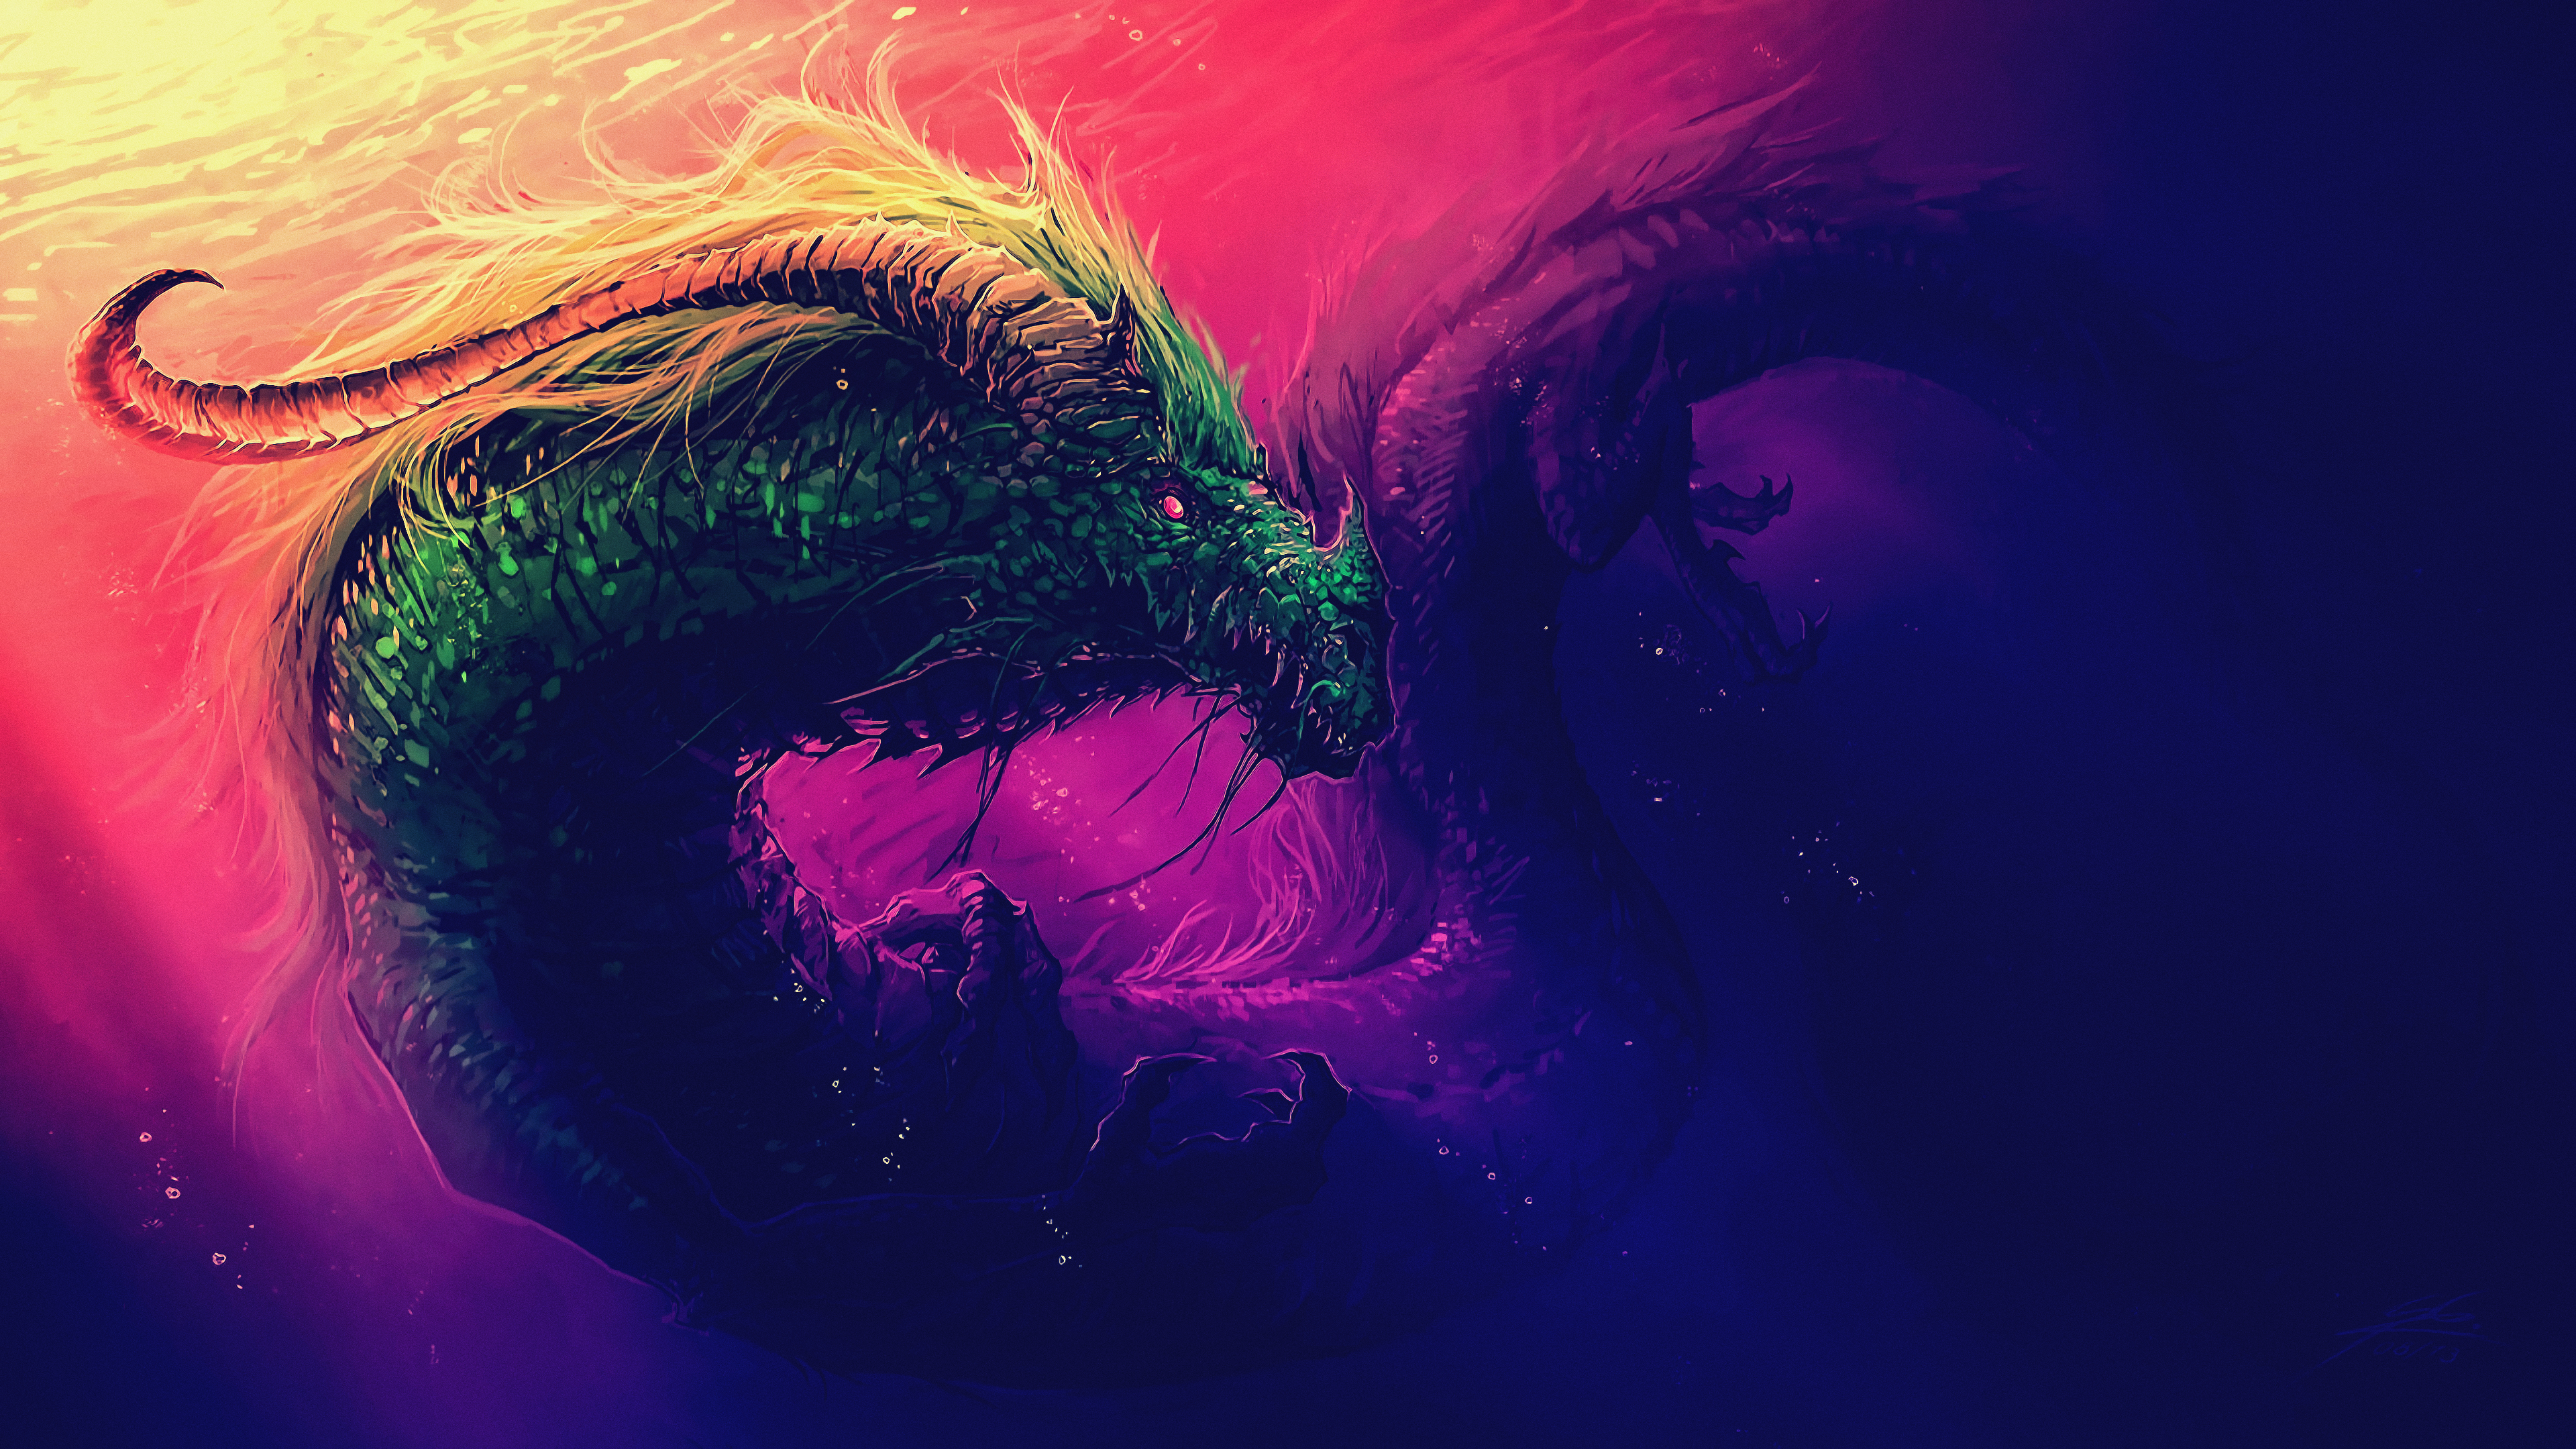 Fantasy Dragon 4K Art
 Wallpapers